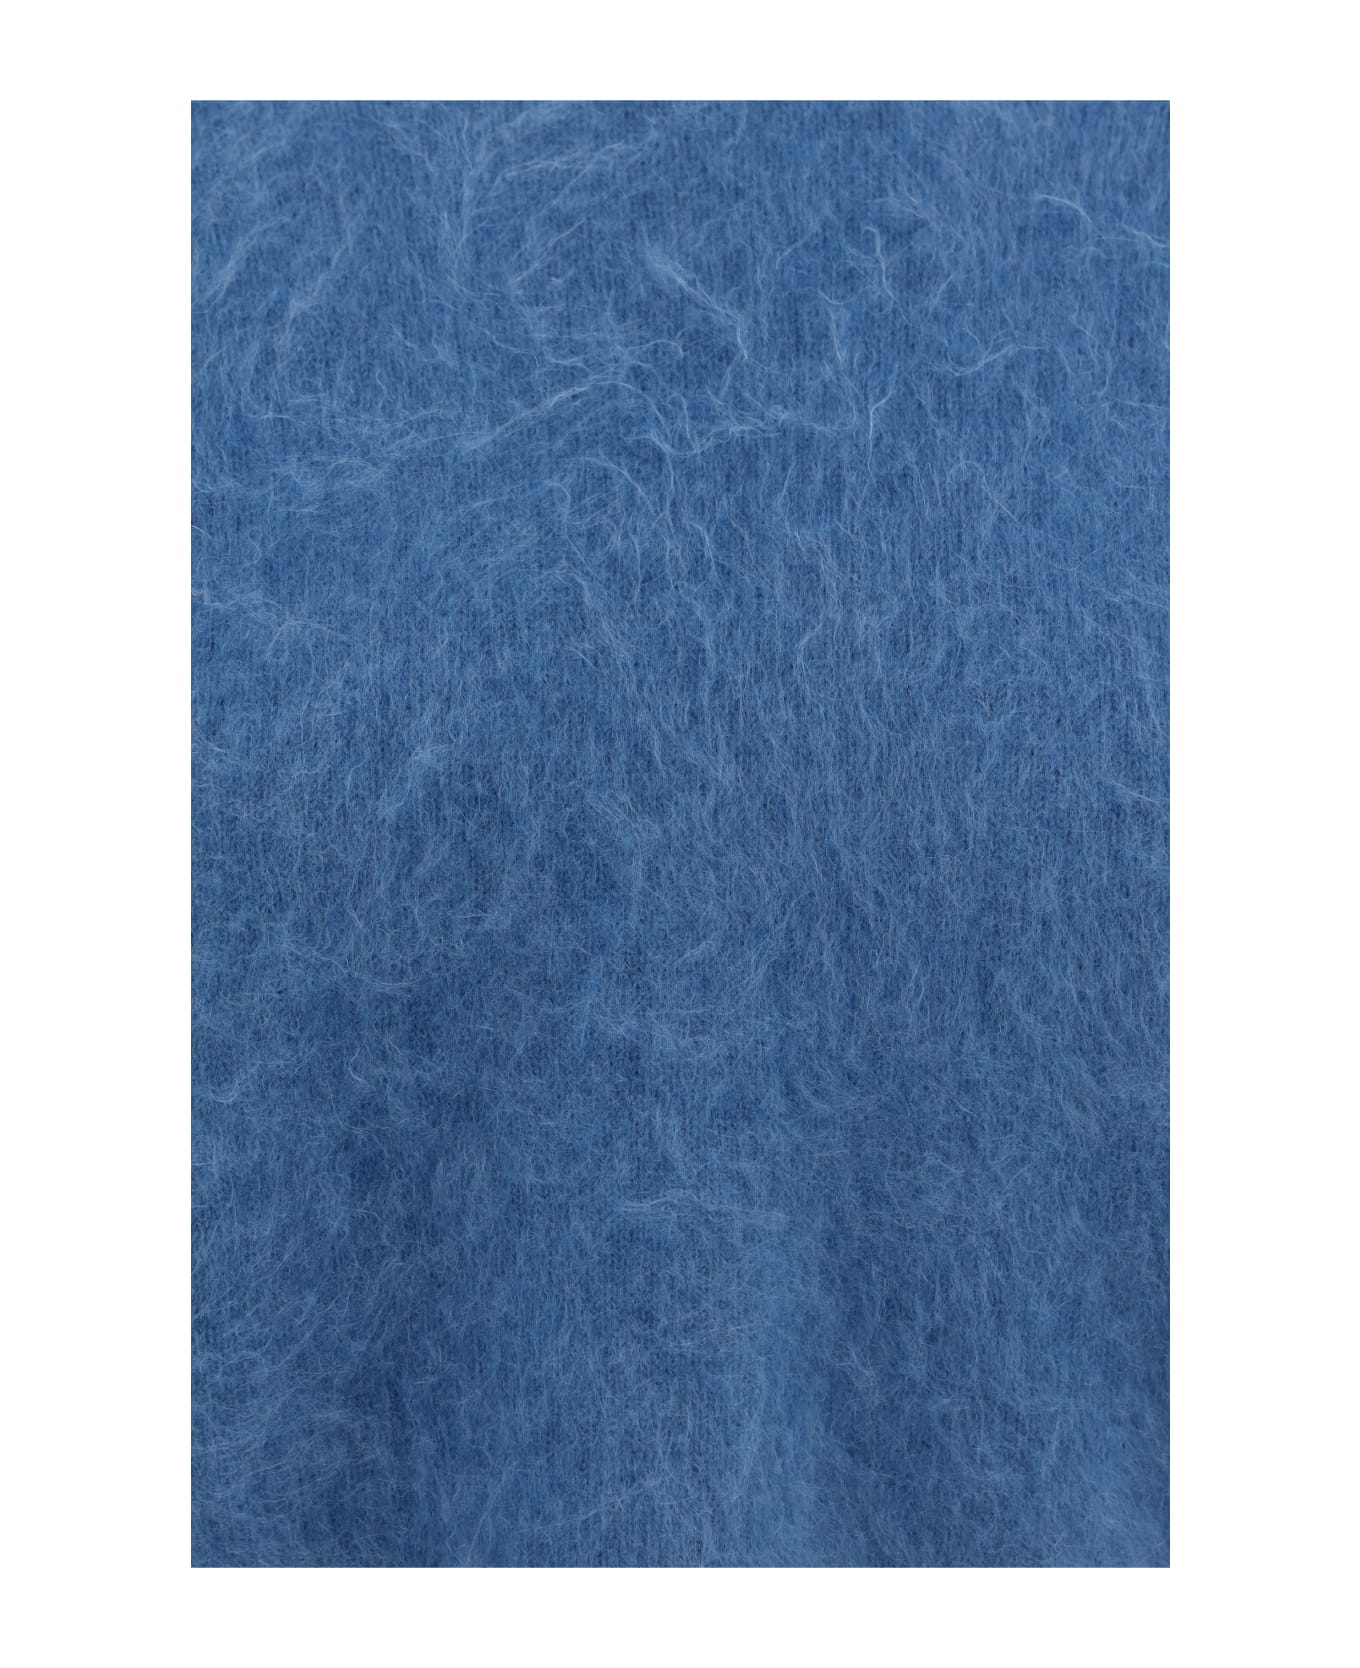 Lisa Yang Juniper Sweater - Stormy Blue Brushed